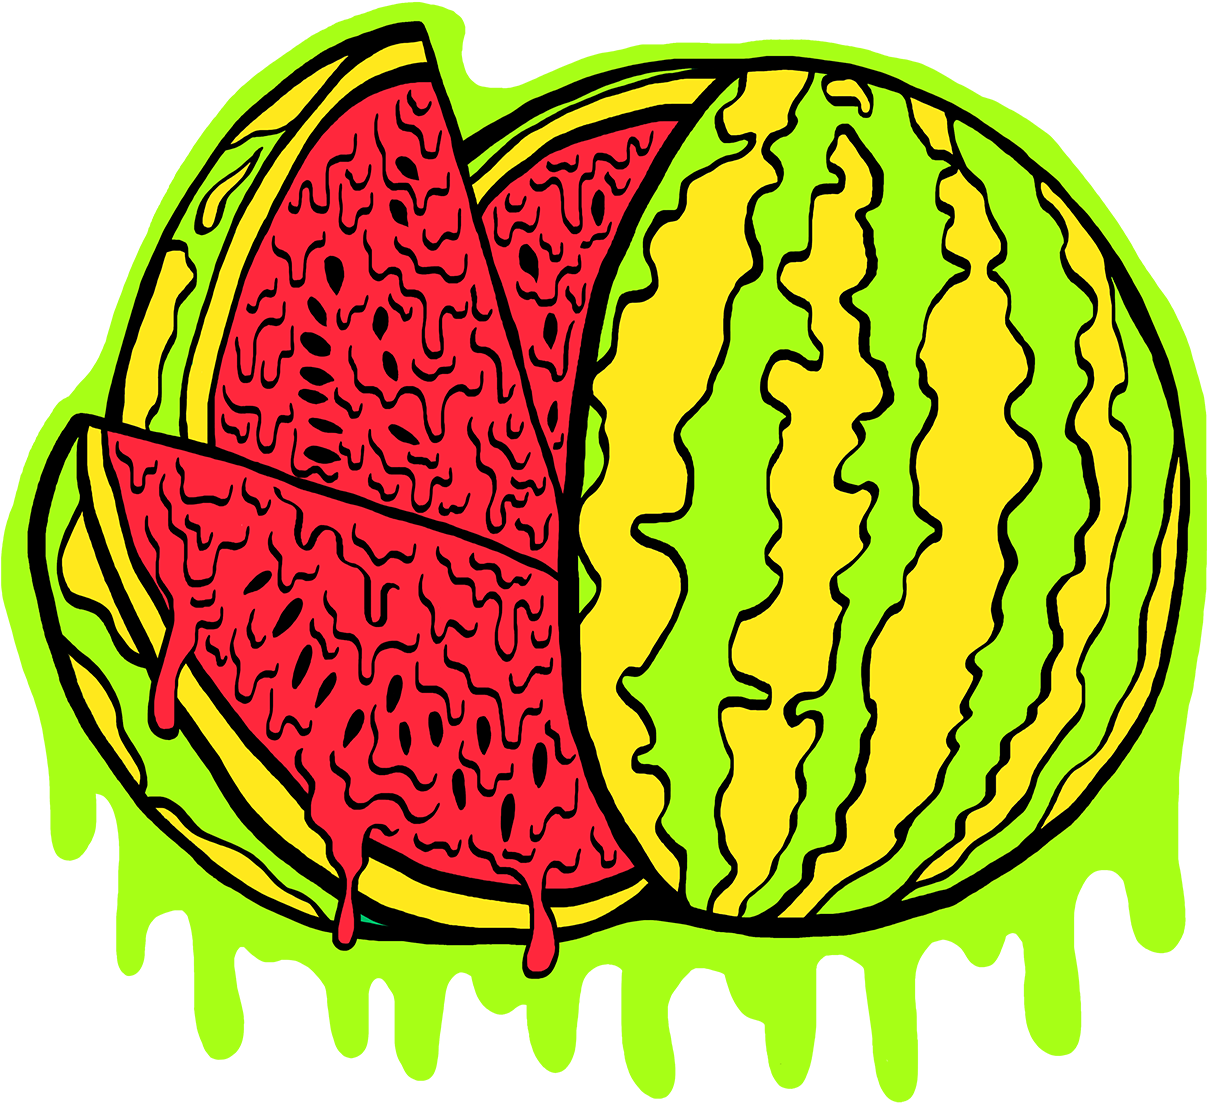 Rotten Fruits Watermelon Tee - Watermelon (1500x1500)